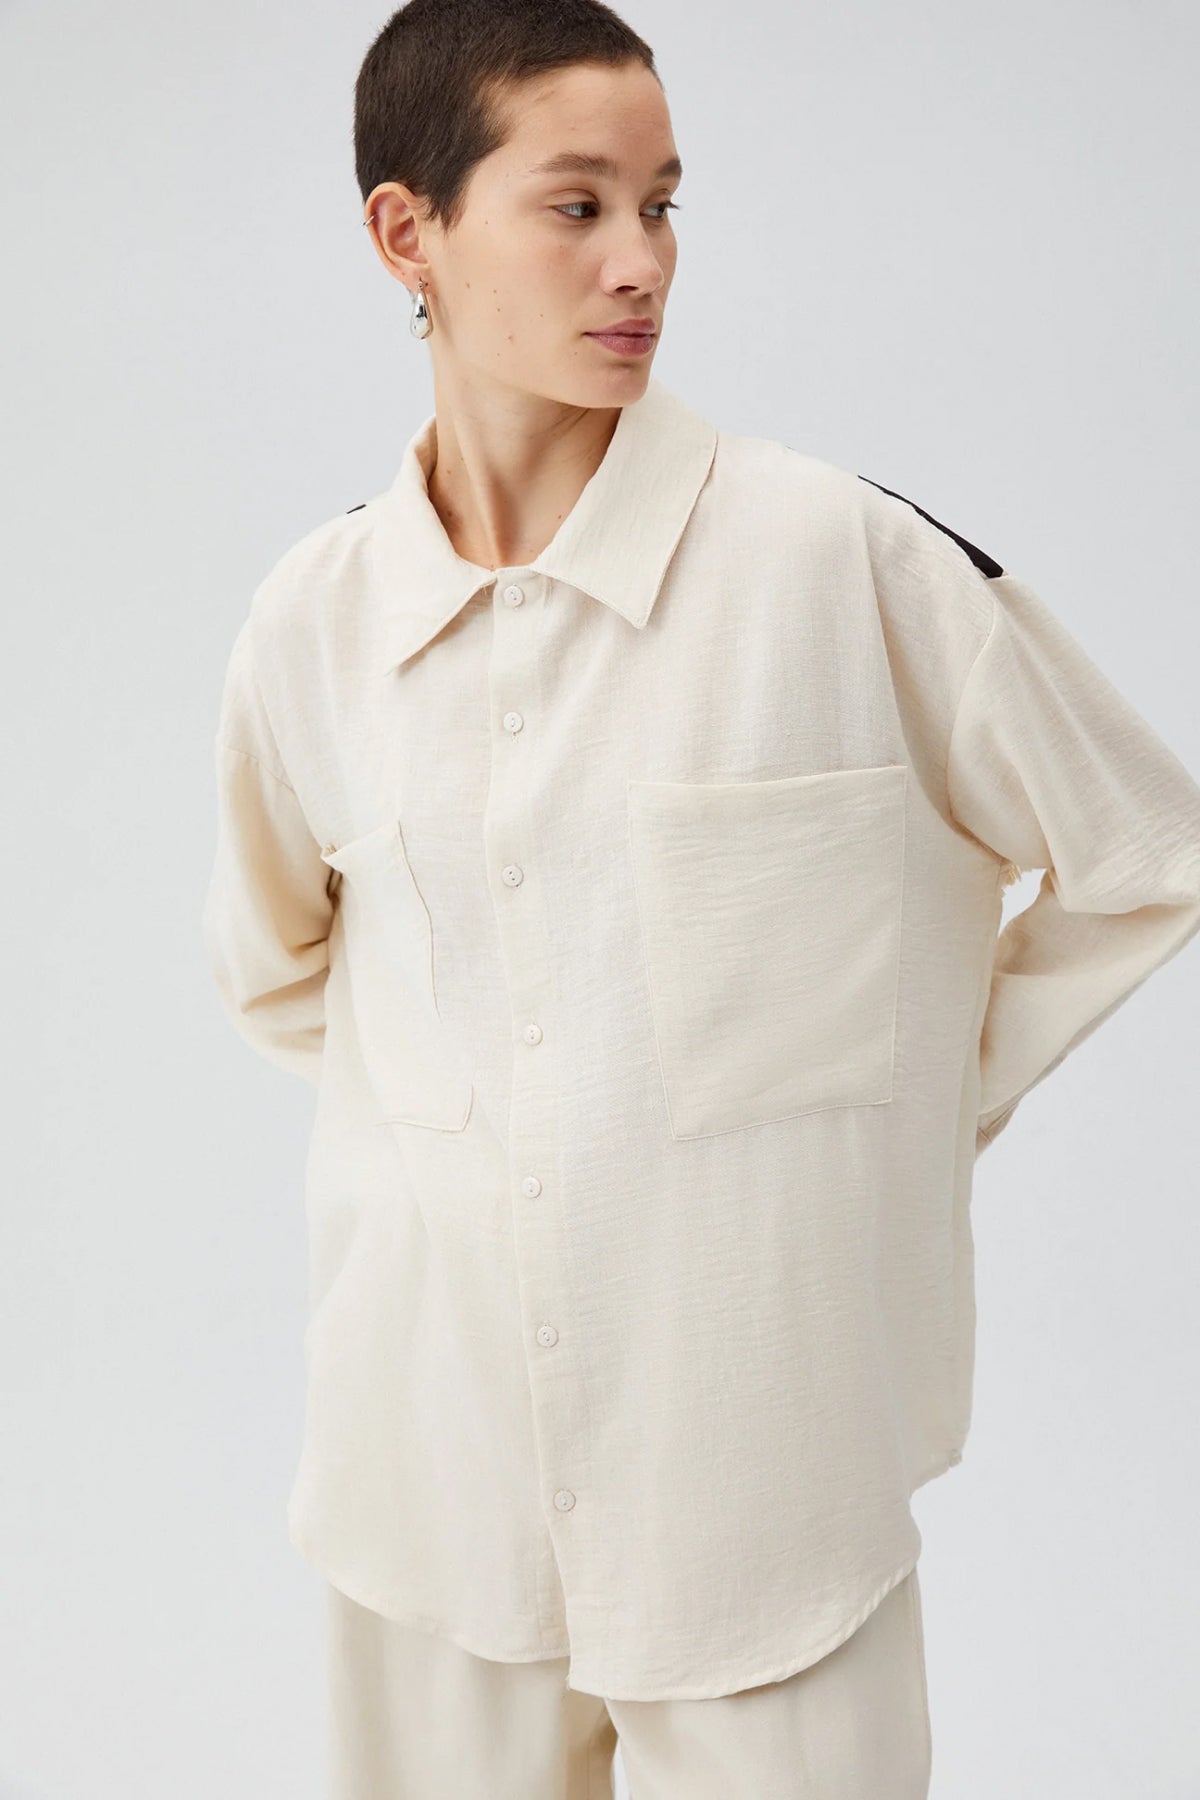 Boho Charm Tassel Print Shirt (Beige) - Small - Shirts & Tops